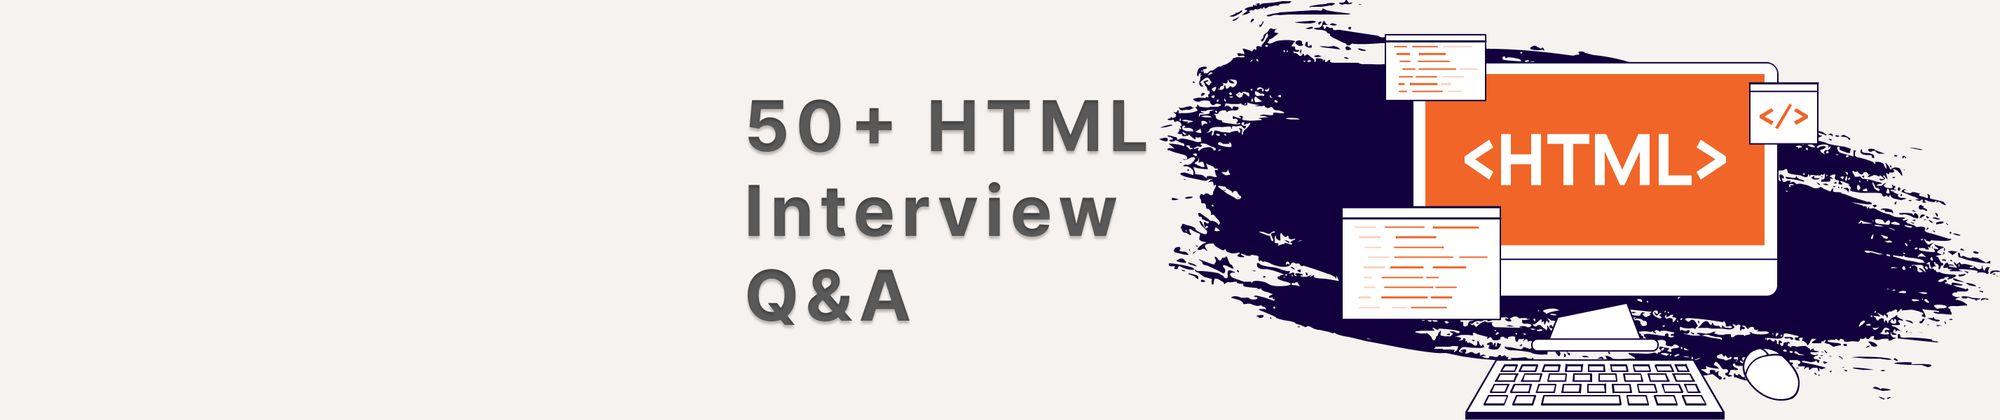 HTML 50+ Interview QA